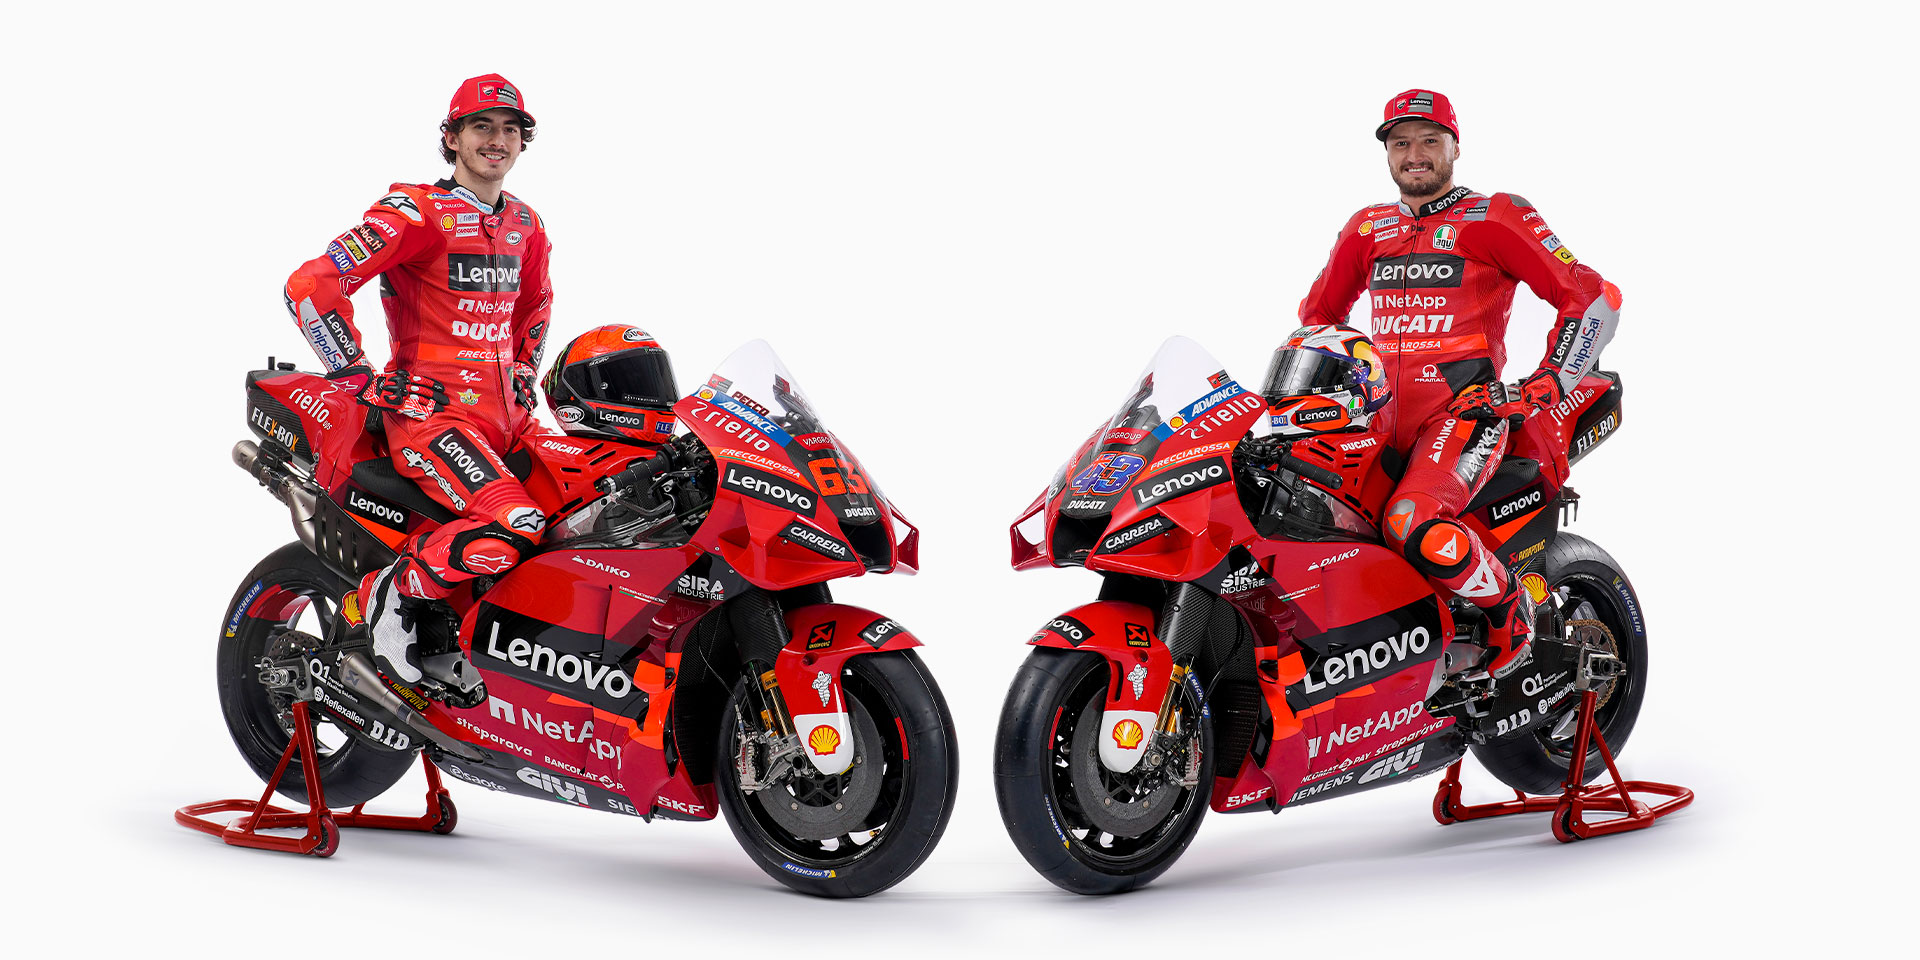 The 2022 Ducati Lenovo Team presented online